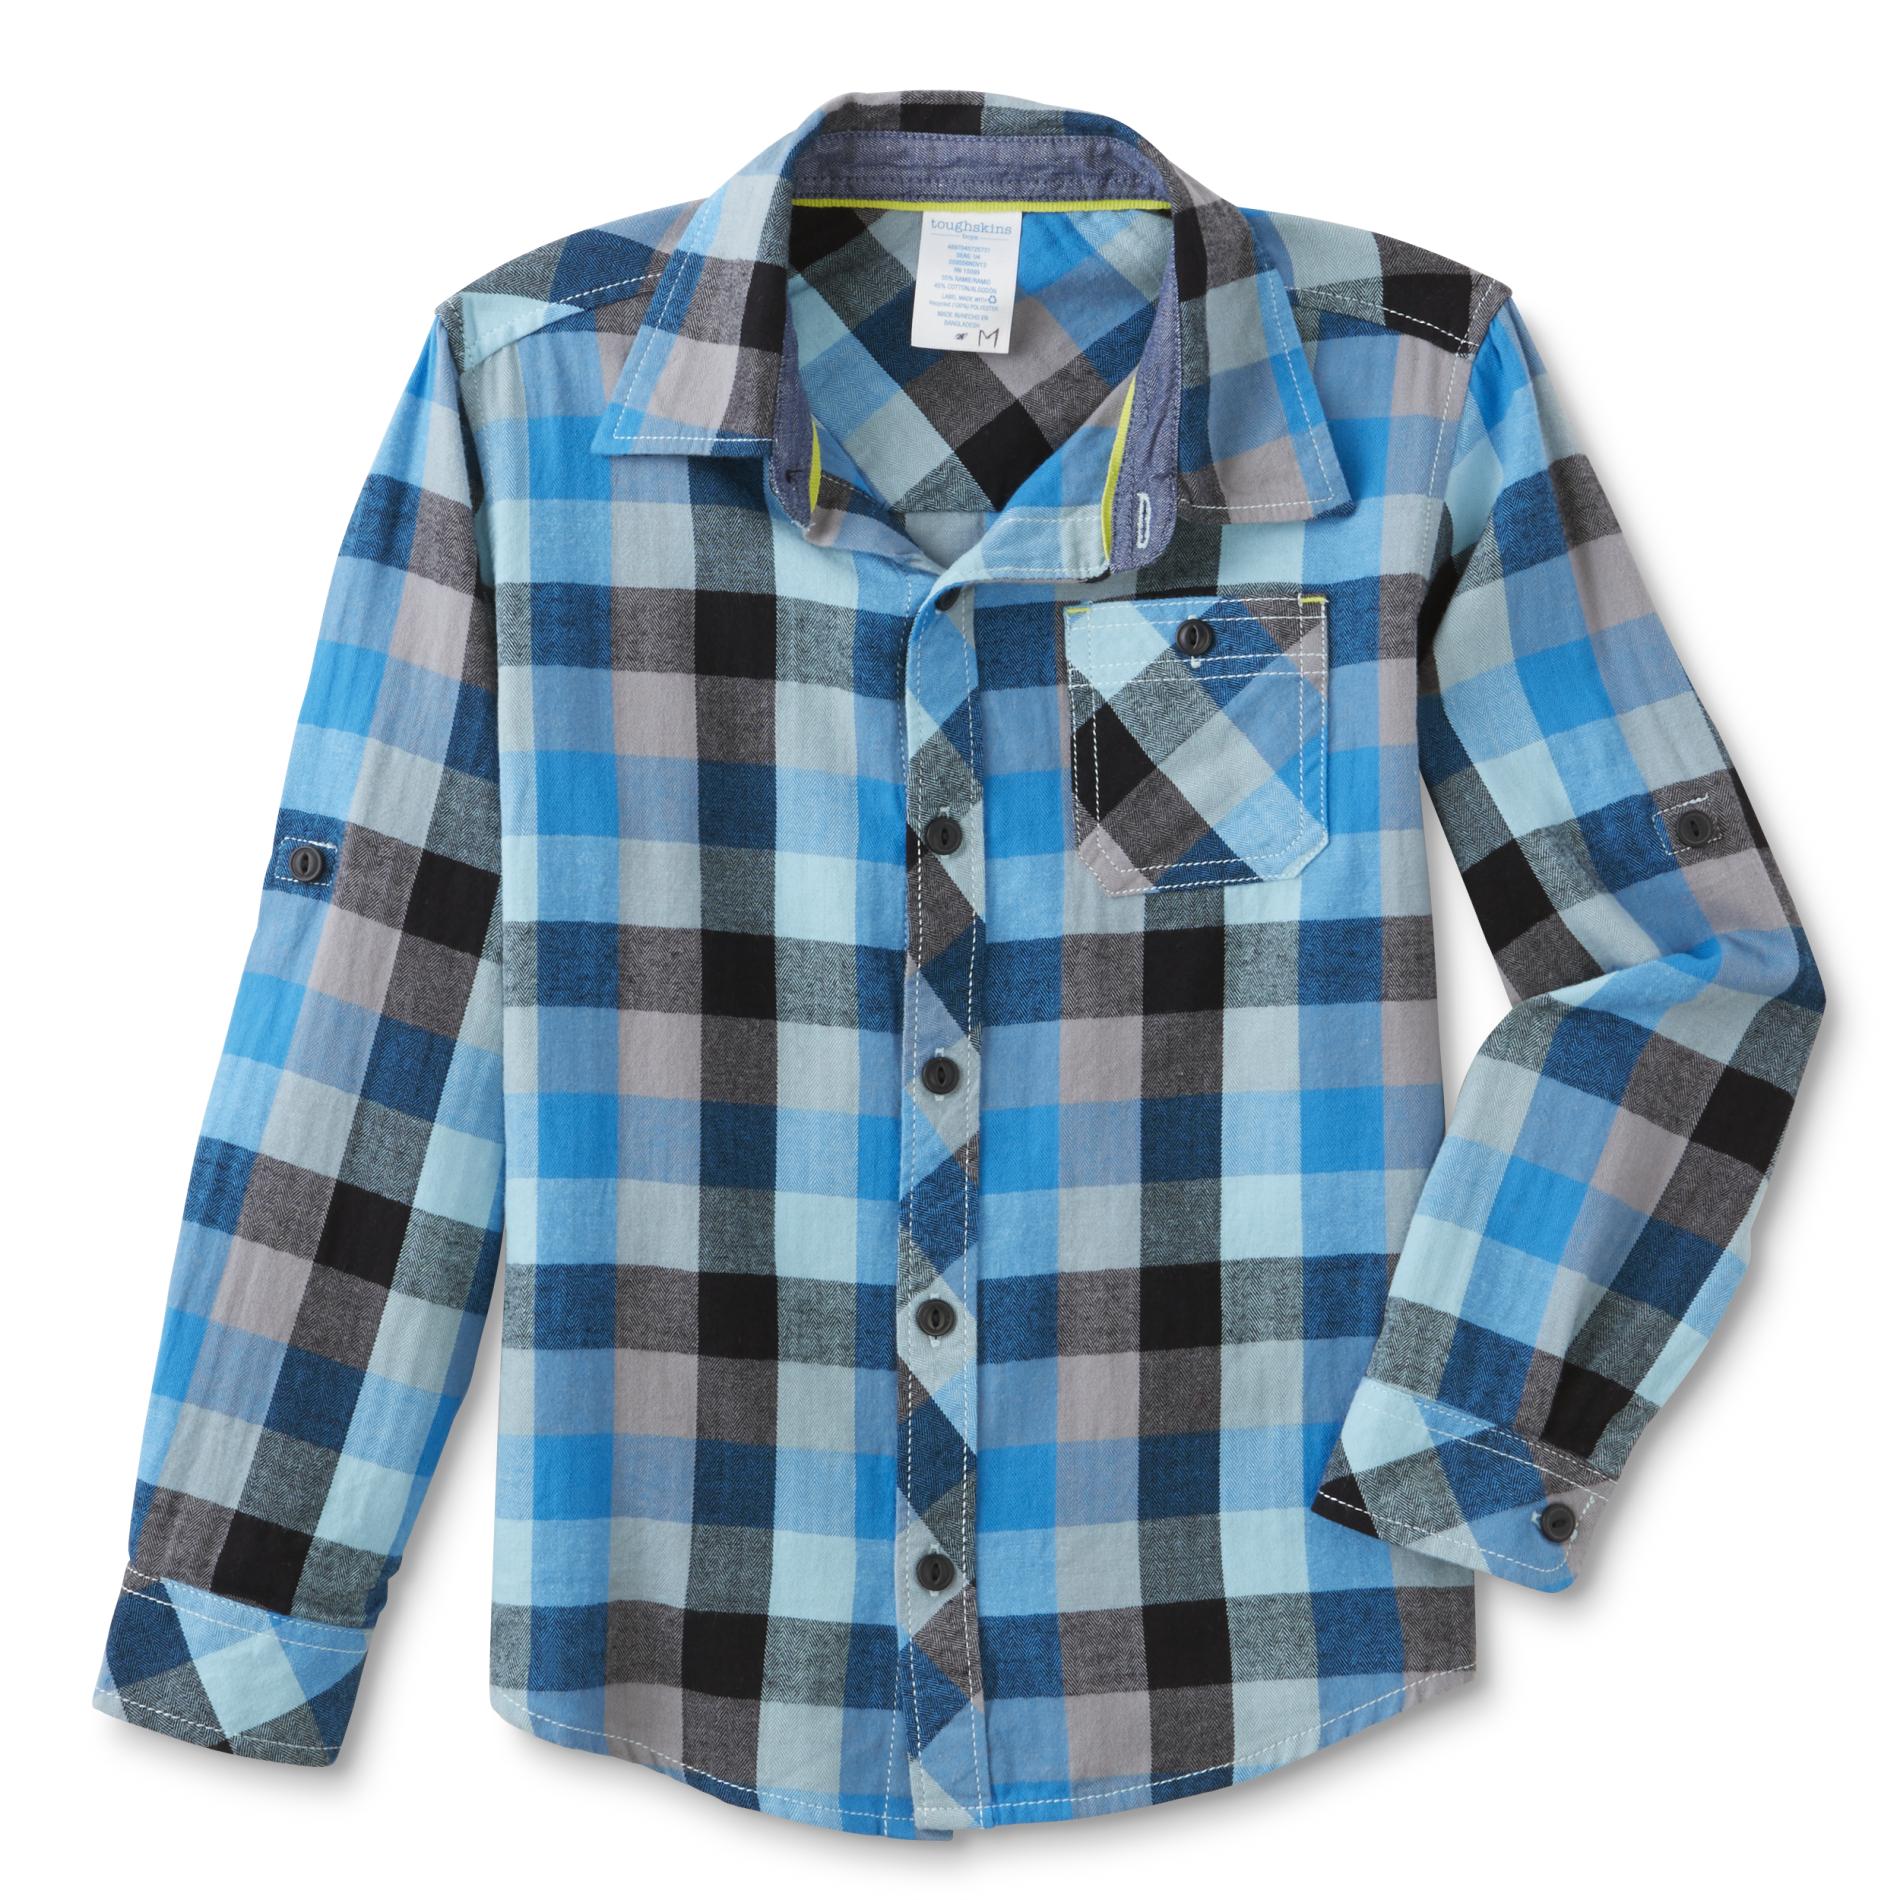 Toughskins Boy's Flannel Shirt - Plaid